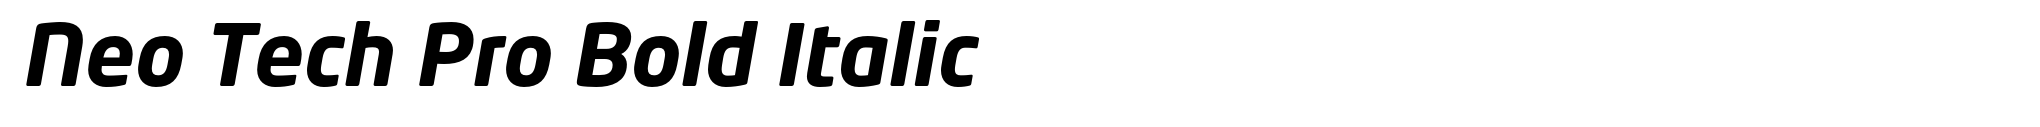 Neo Tech Pro Bold Italic image